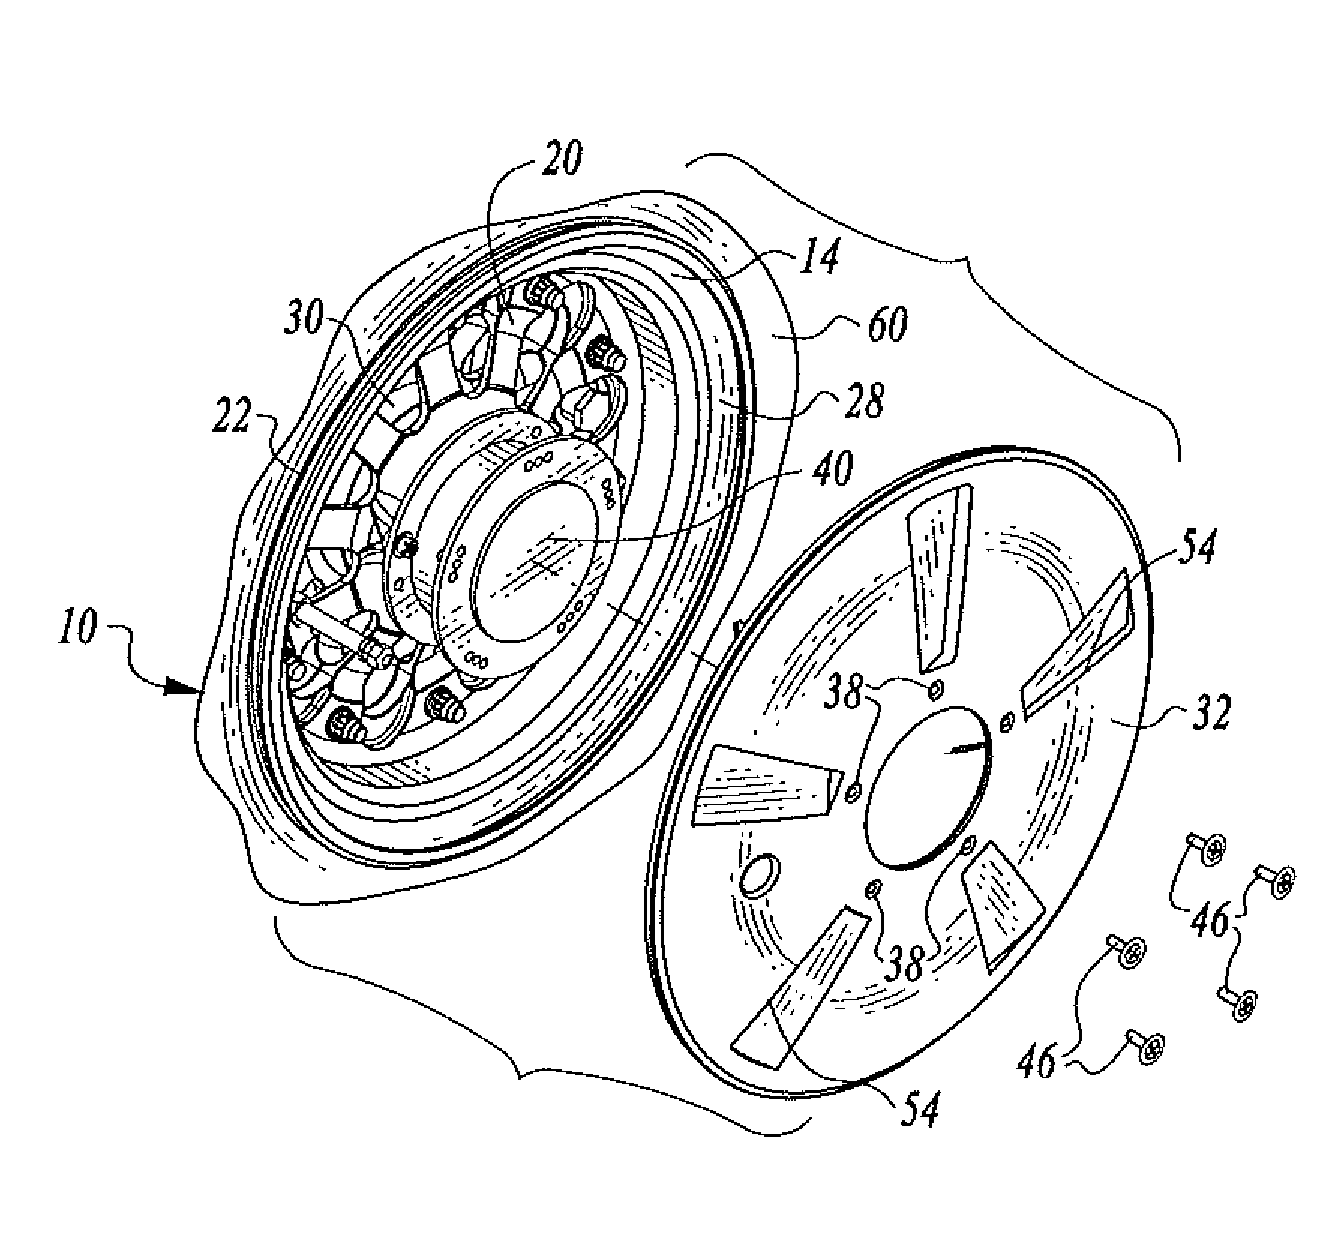 Aircraft hubcap structure